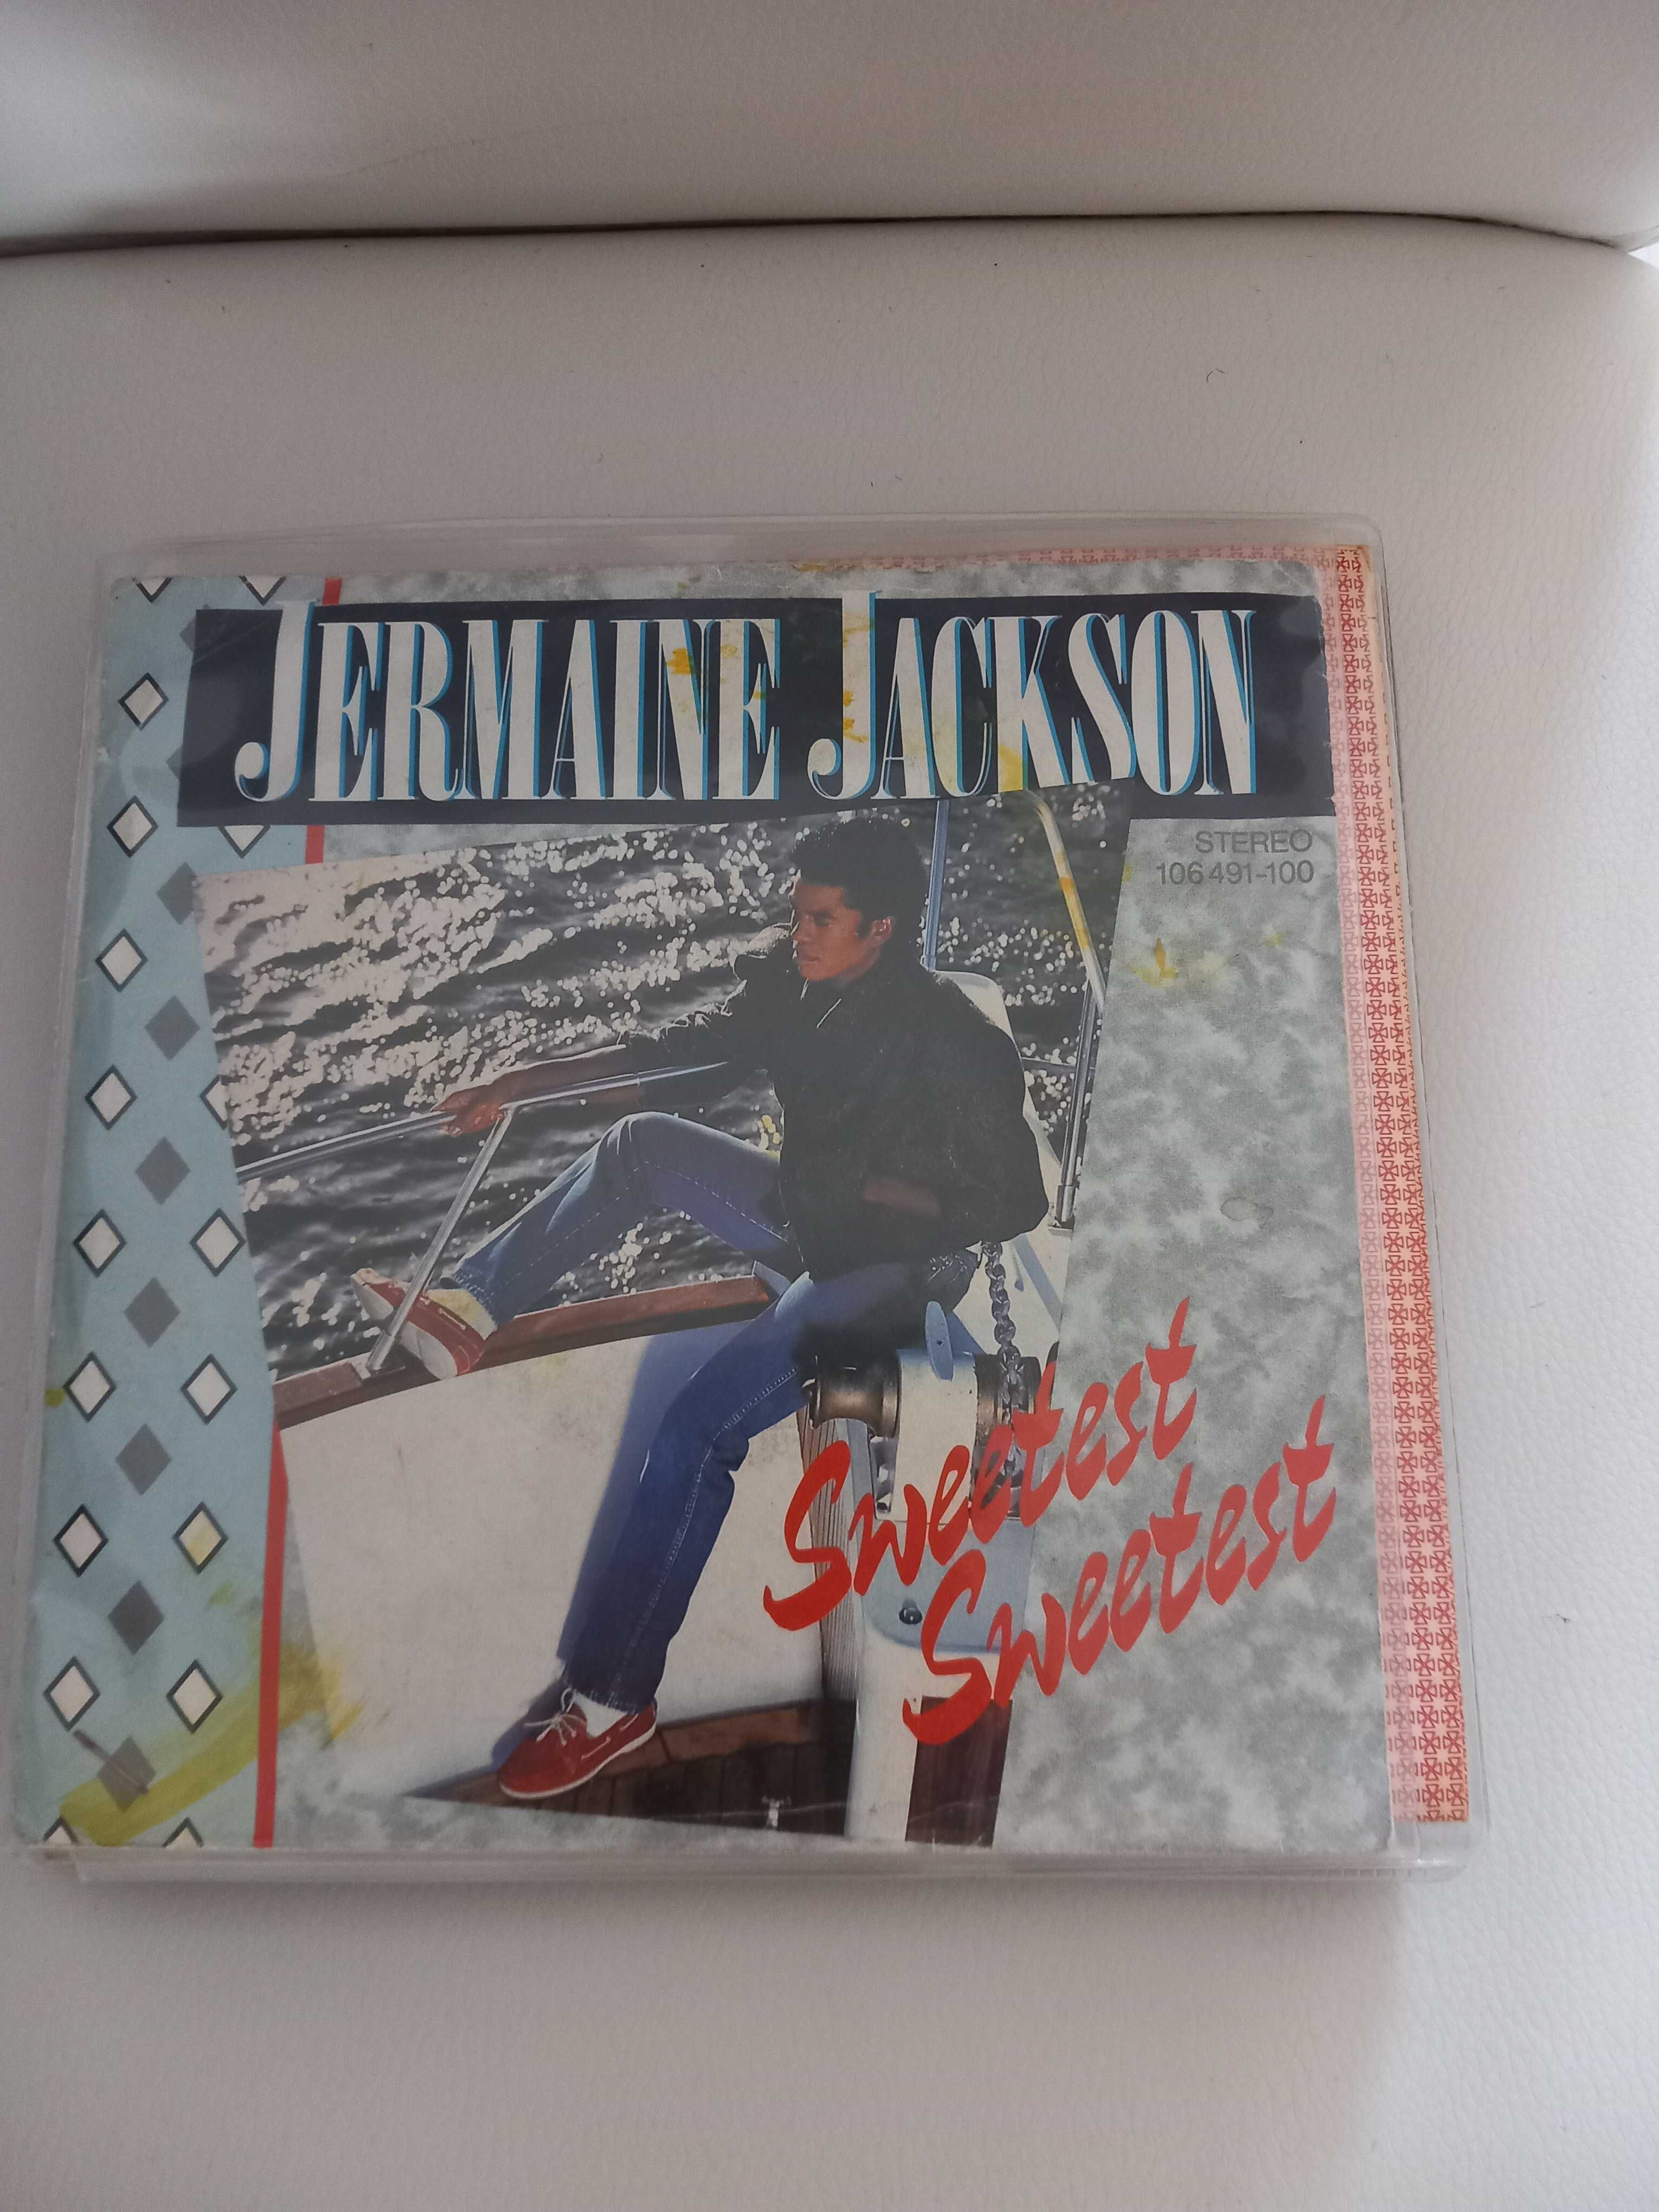 Jermaine Jackson - sweetest sweetest / come to me